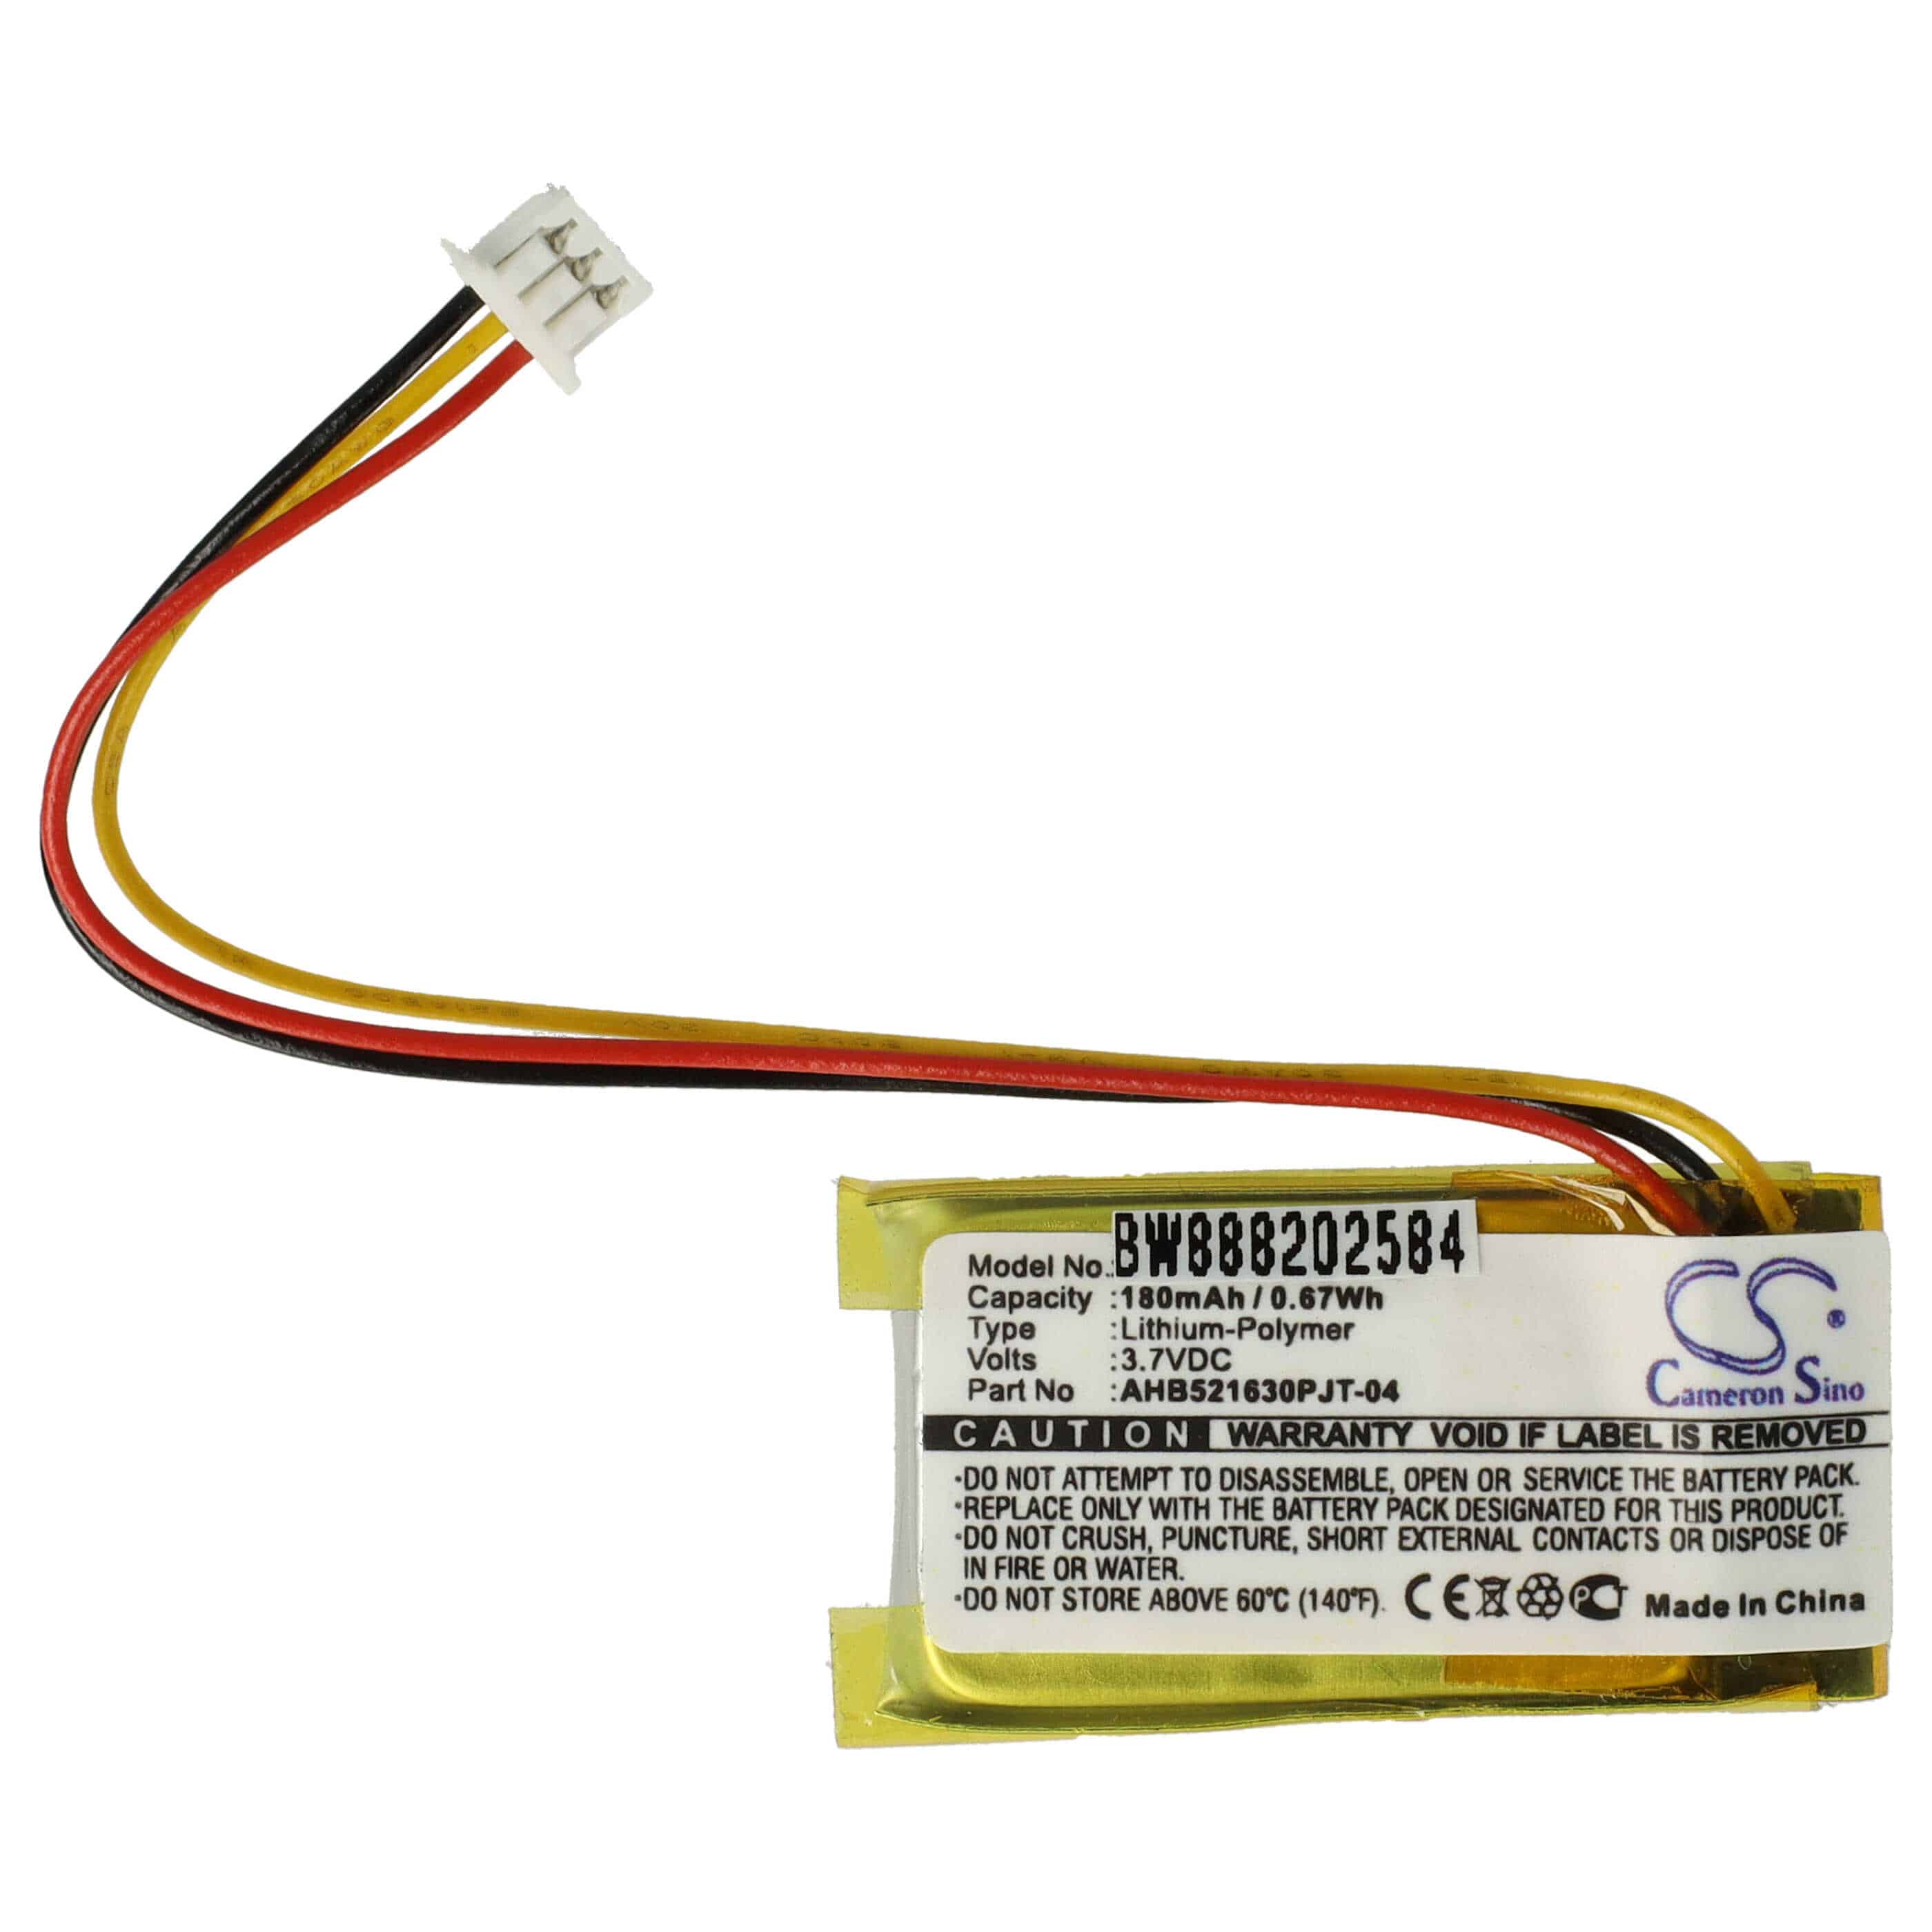 Akumulator bateria do myszki zamiennik Logitech 533-000151, AHB521630, 533-000069 - 180 mAh 3,7 V LiPo